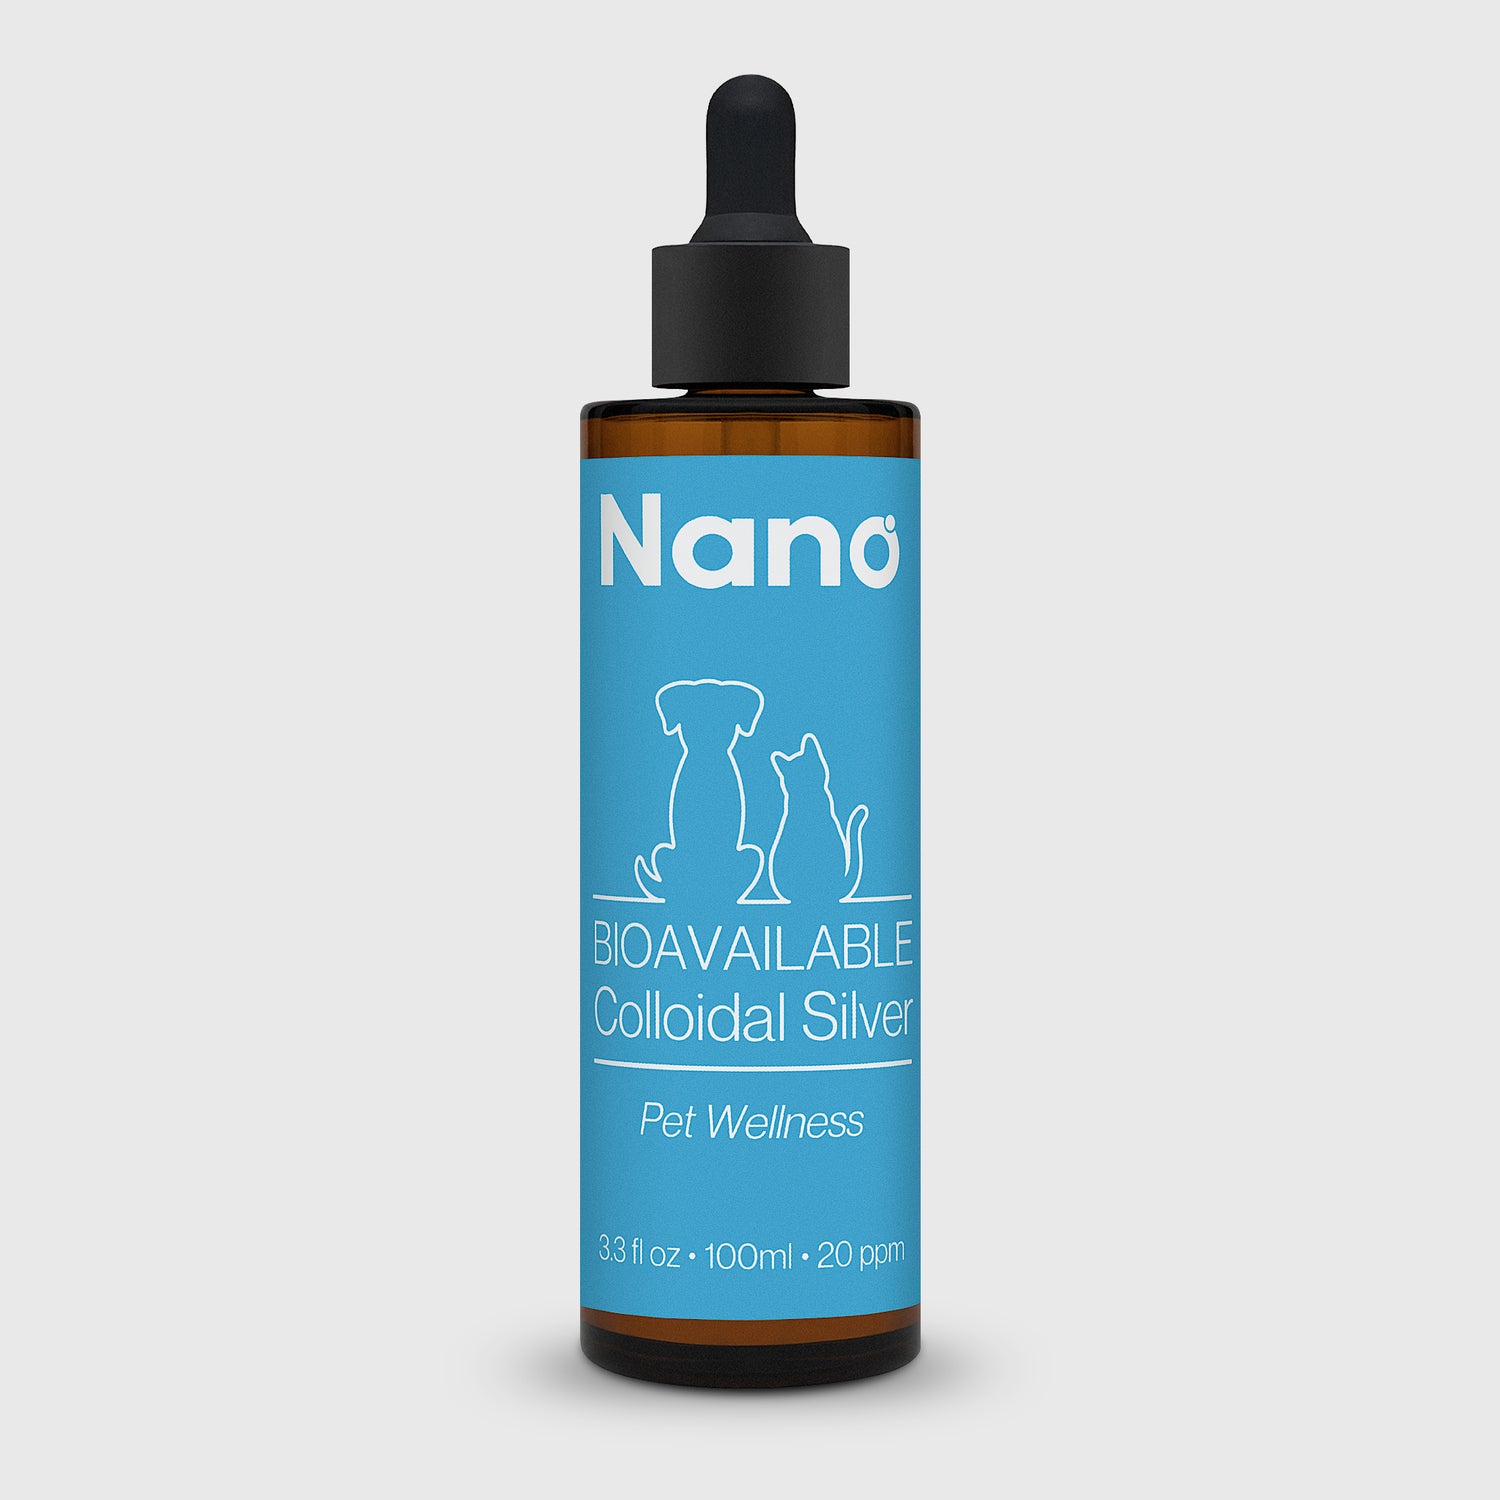 100ml bottle of Nano 20 ppm bioavailable colloidal silver pet wellness supplement